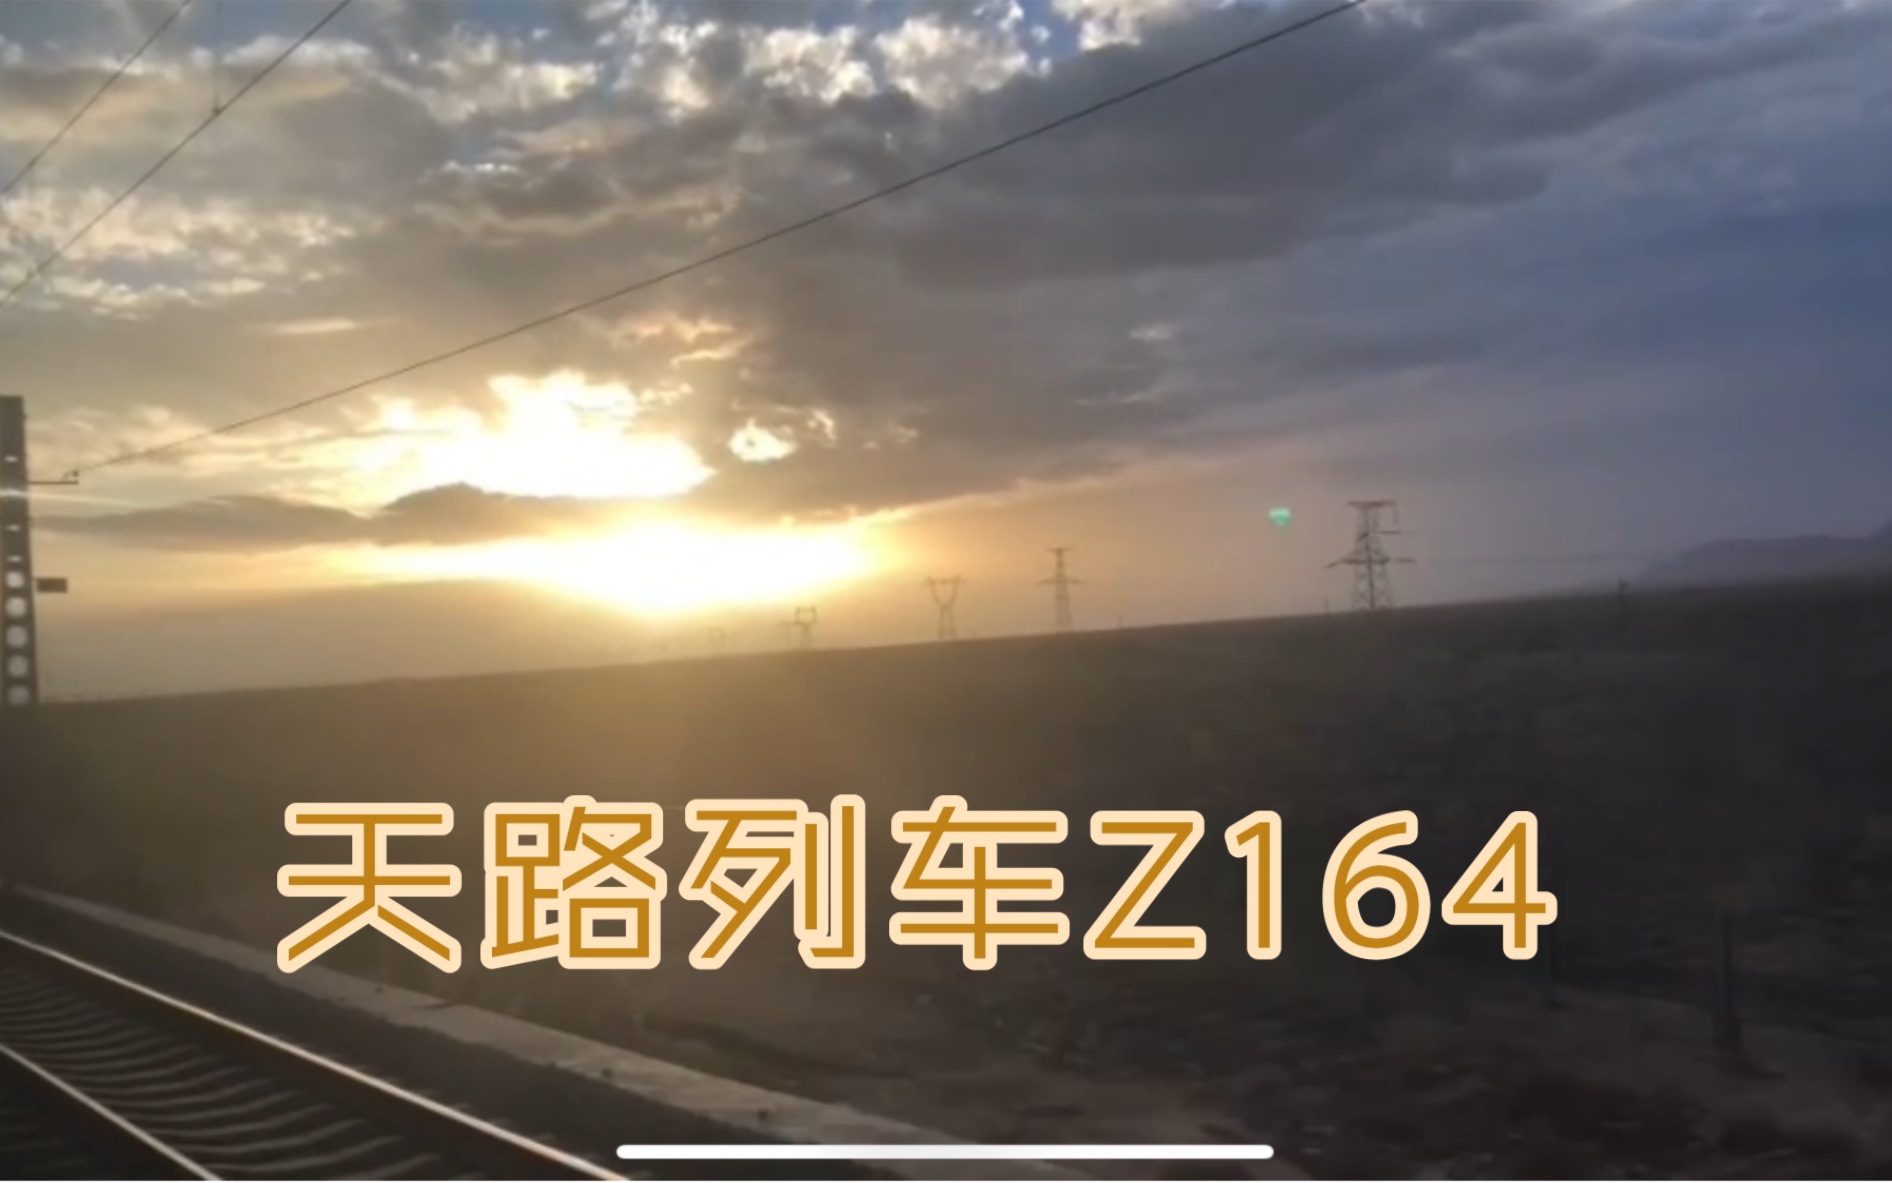 Z164次列车图片